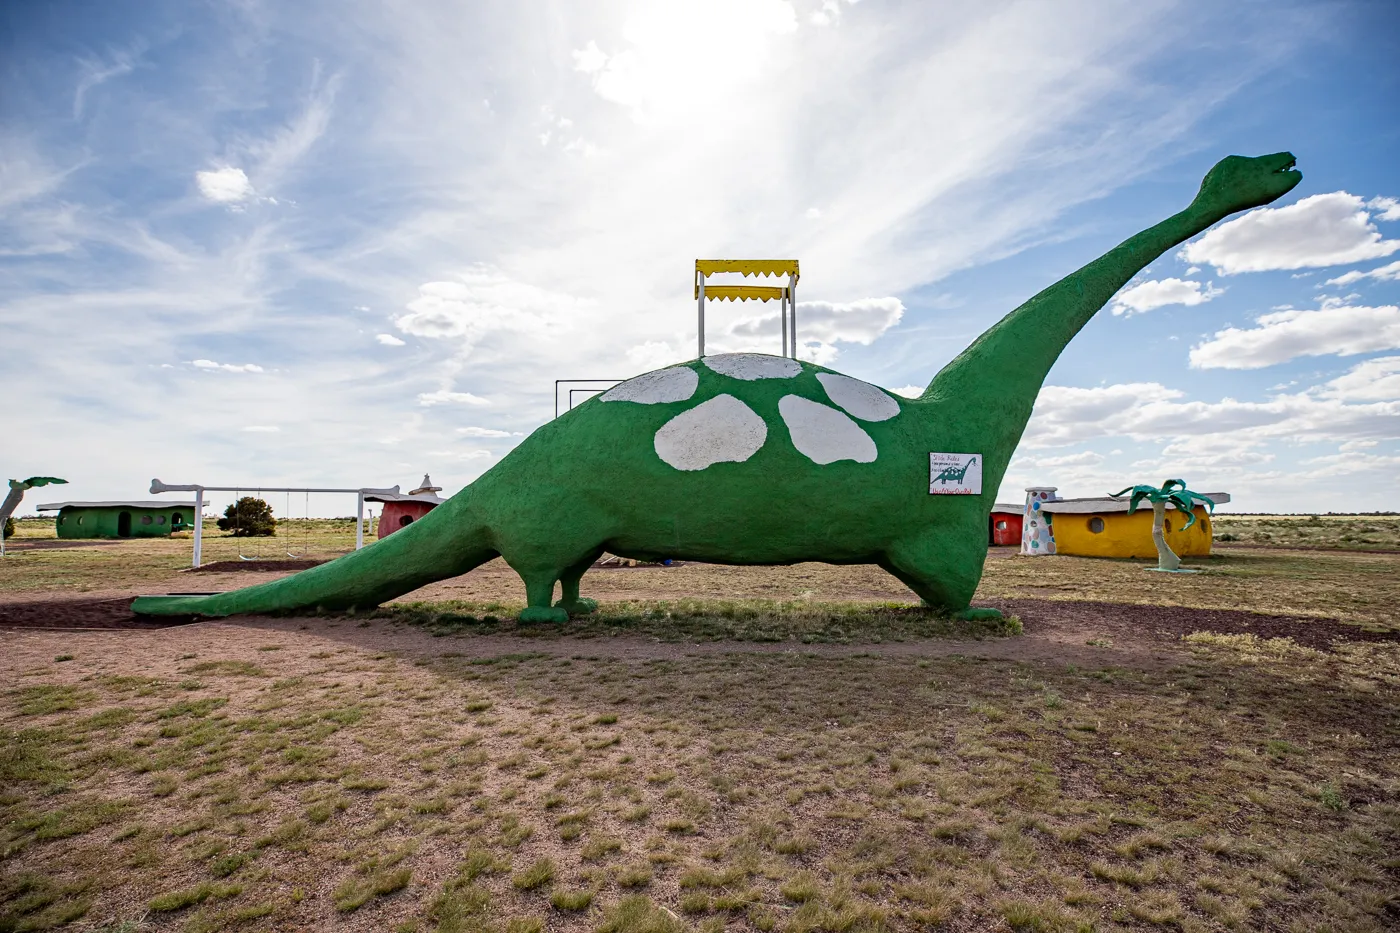 Giant Dinosaur Slide at Flintstones Bedrock City in Williams, Arizona